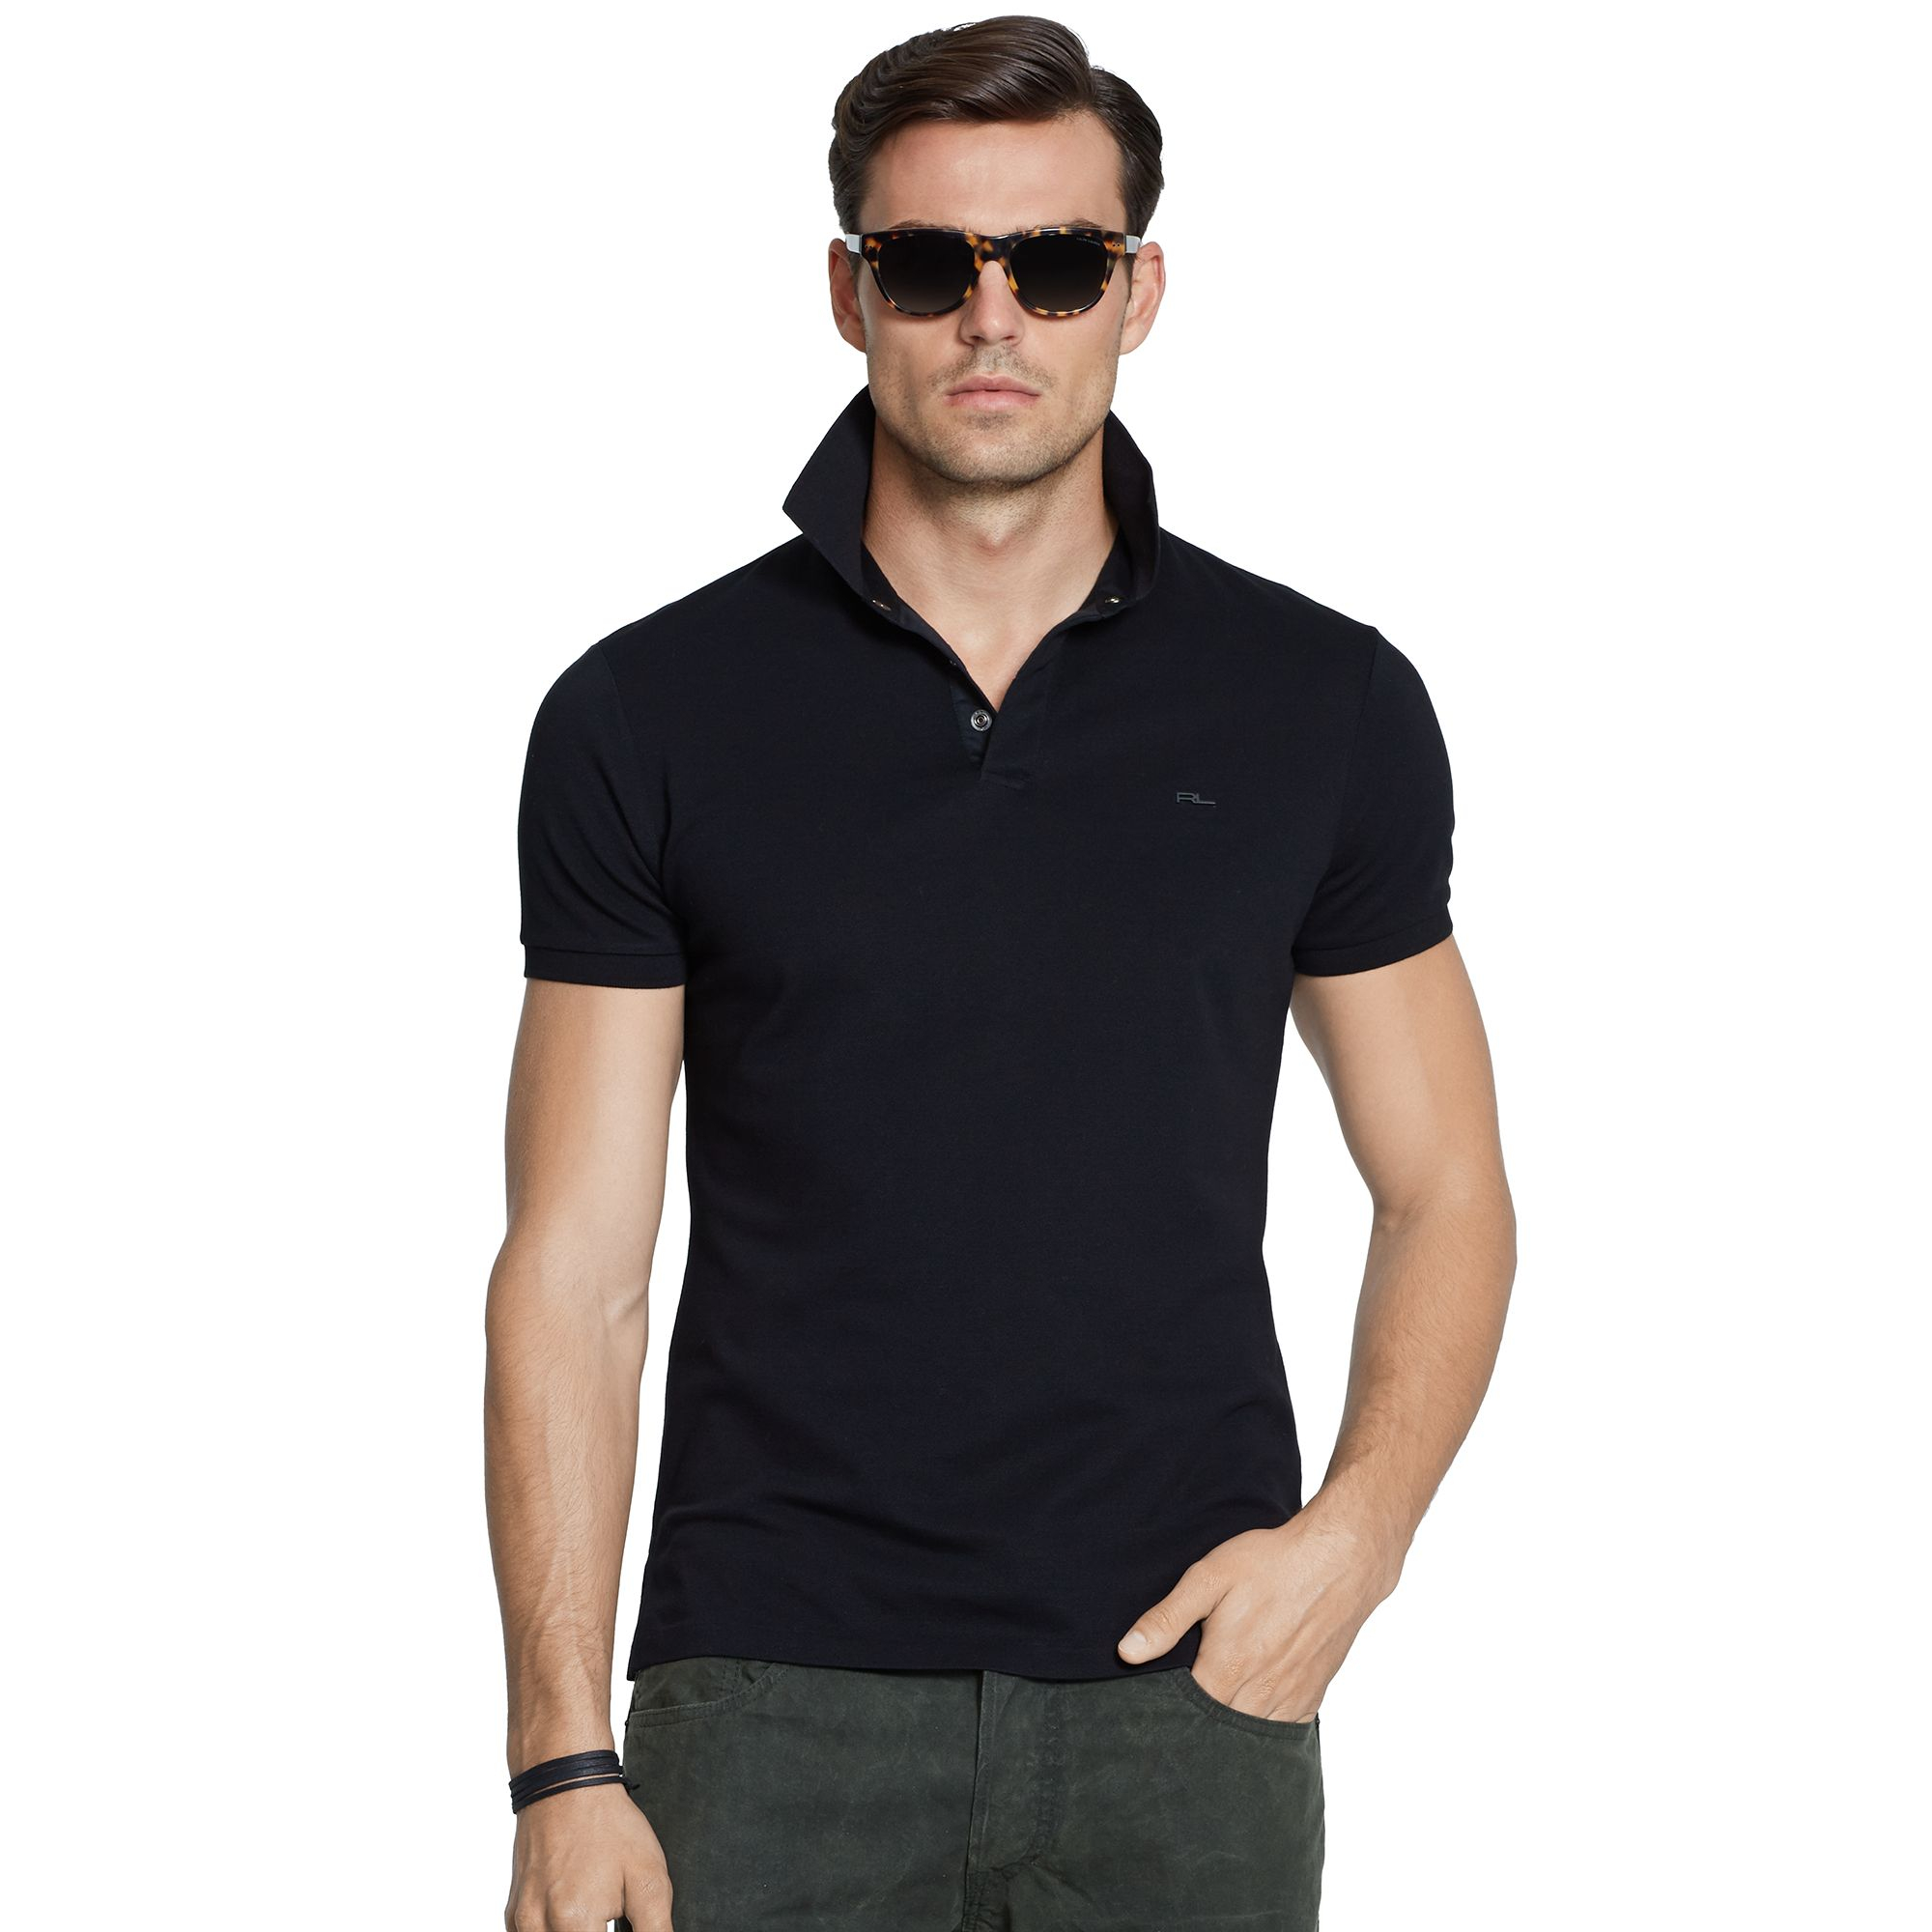 Ralph Lauren Black Label Stretch-cotton Polo Shirt in Black for Men - Lyst